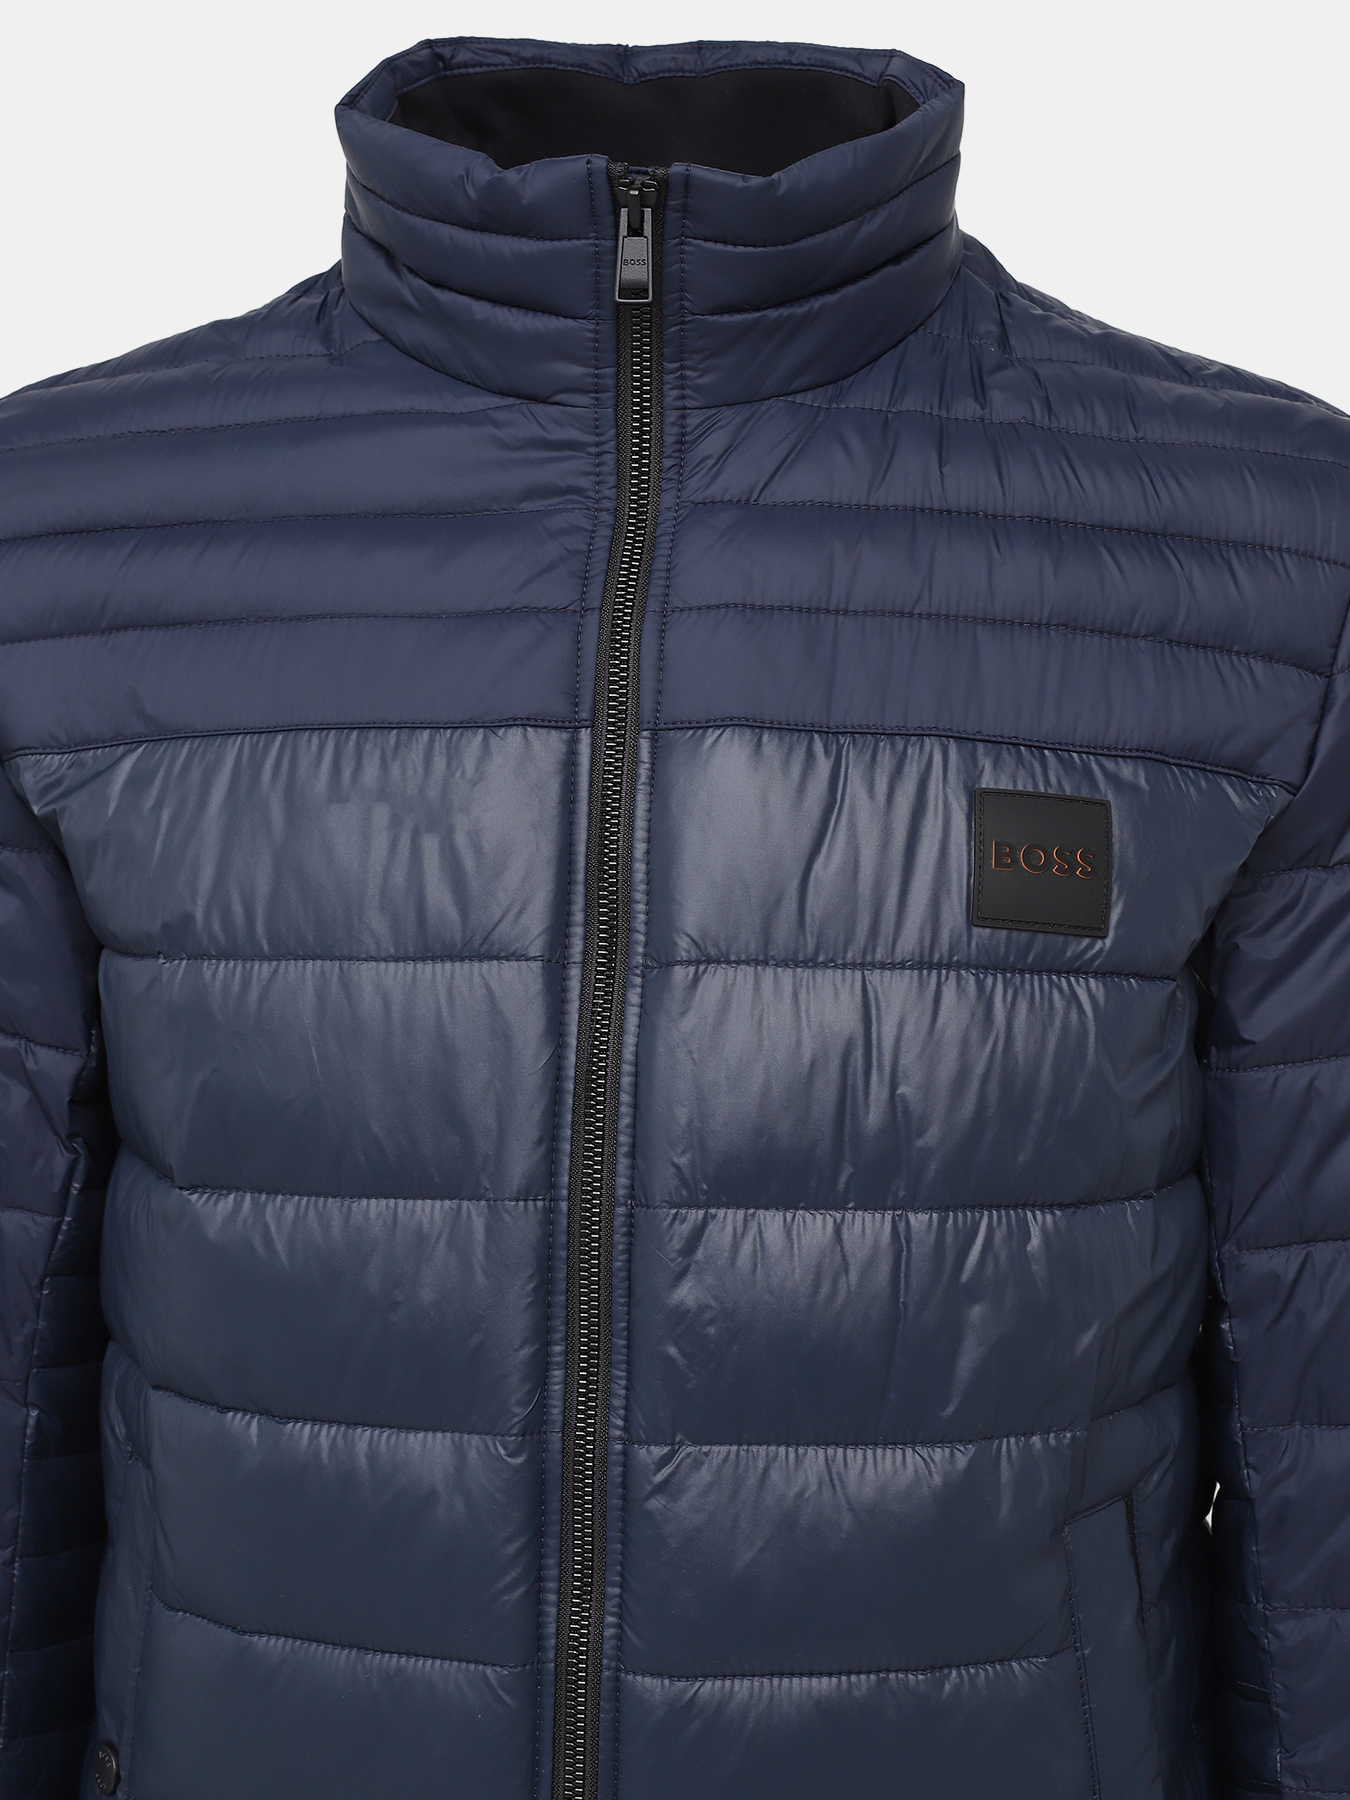 Куртка Oden big BOSS 434135-029, цвет темно-синий, размер 56 - фото 4